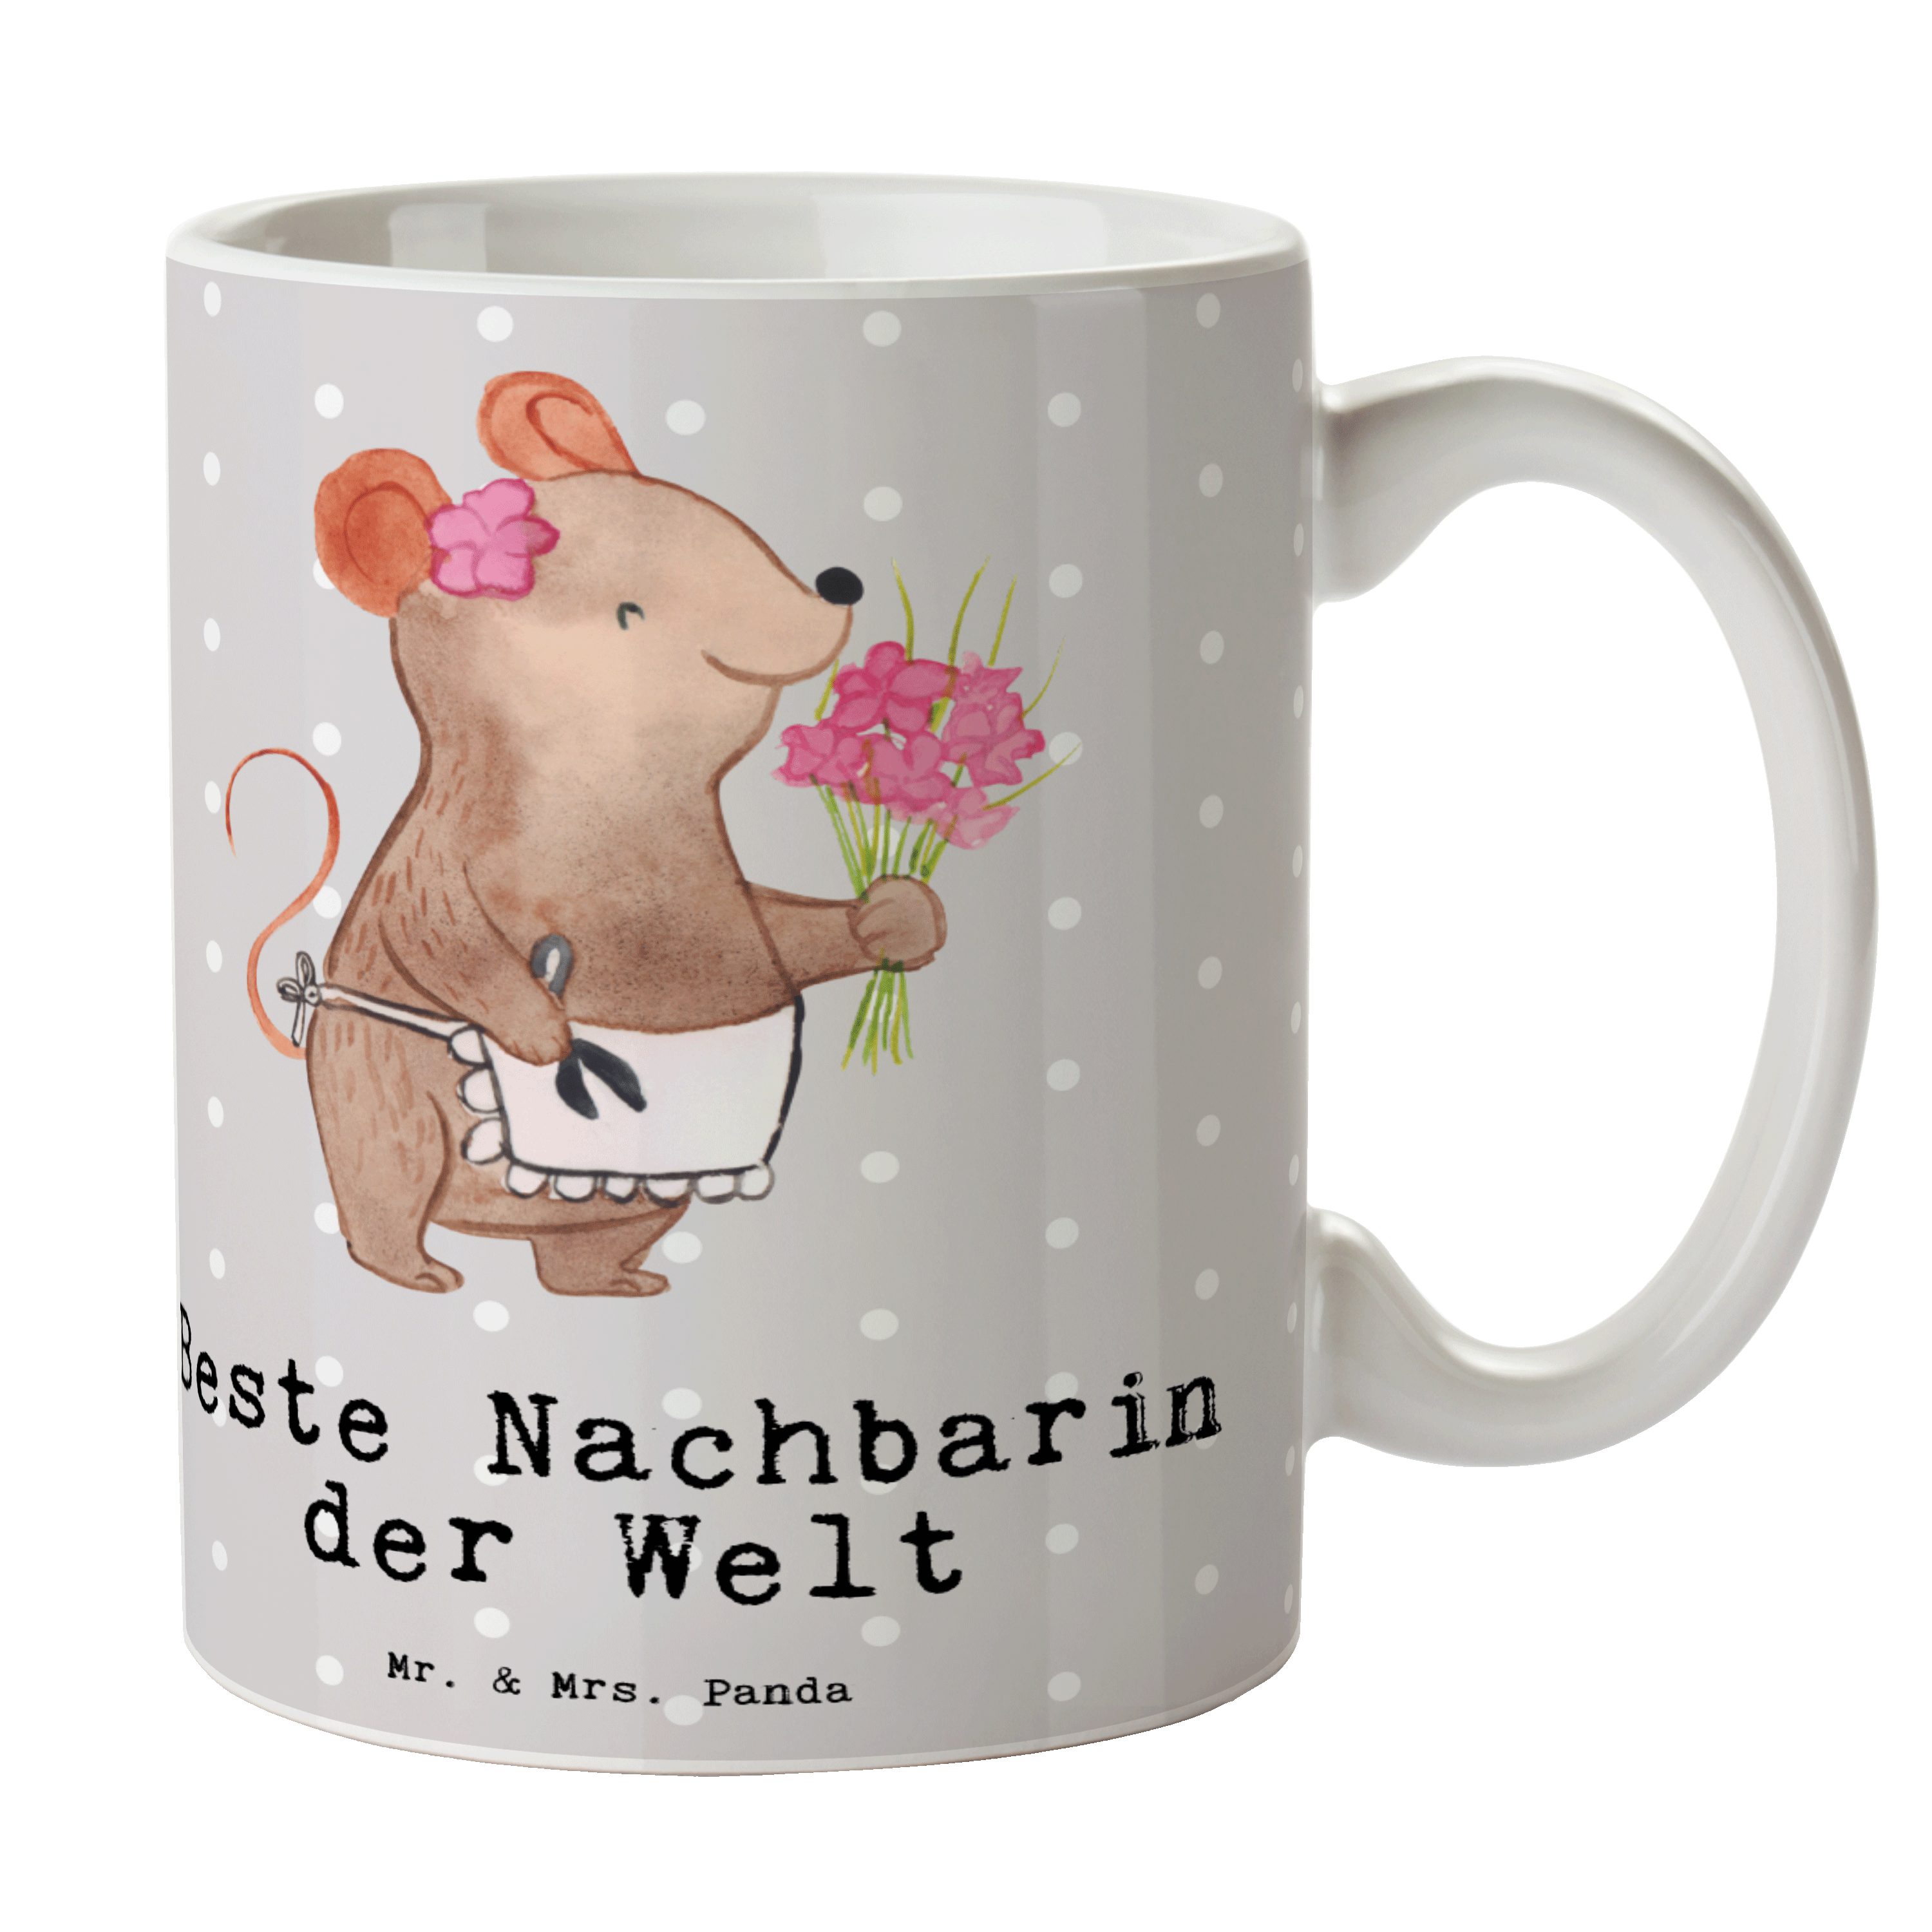 Mr. & Mrs. Panda Tasse Maus Beste Nachbarin der Welt - Grau Pastell - Geschenk, Kaffeetasse, Keramik